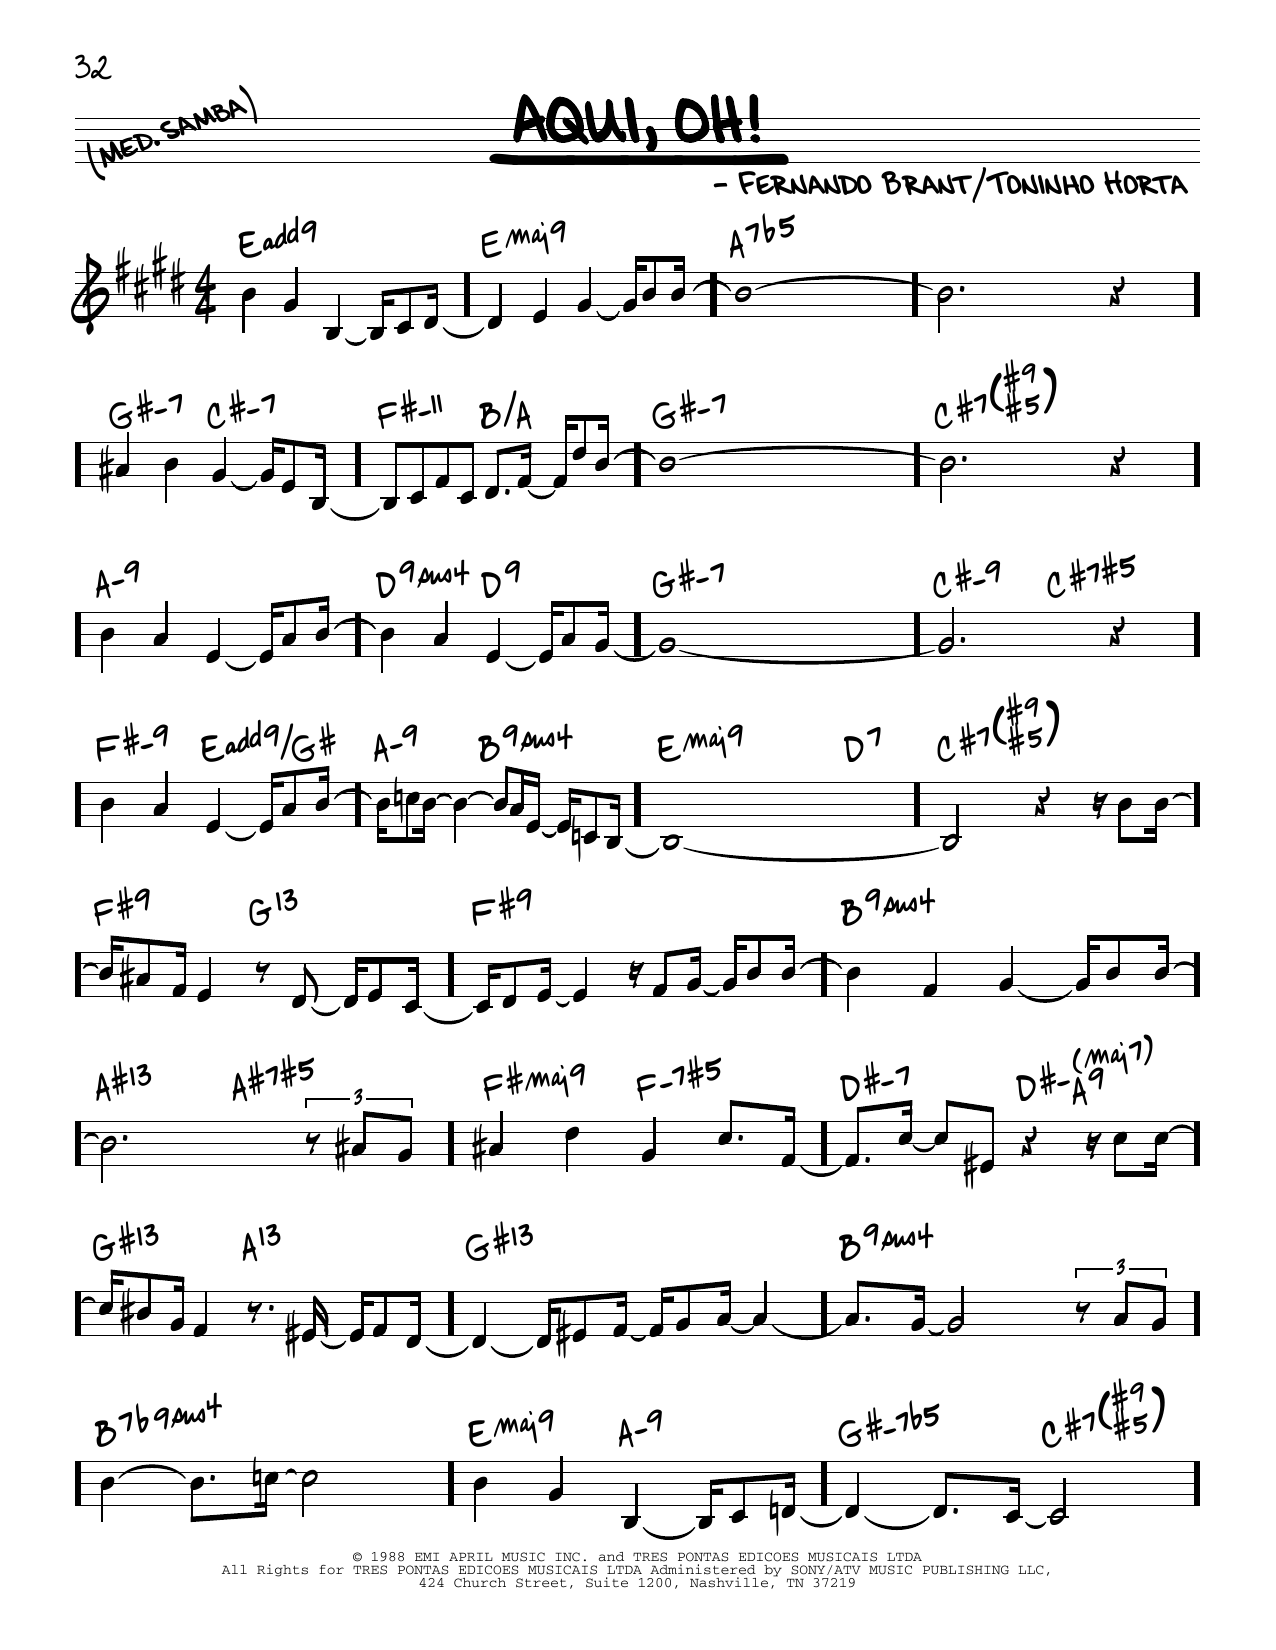 Toninho Horta Aqui, Oh! Sheet Music Notes & Chords for Real Book – Melody & Chords - Download or Print PDF